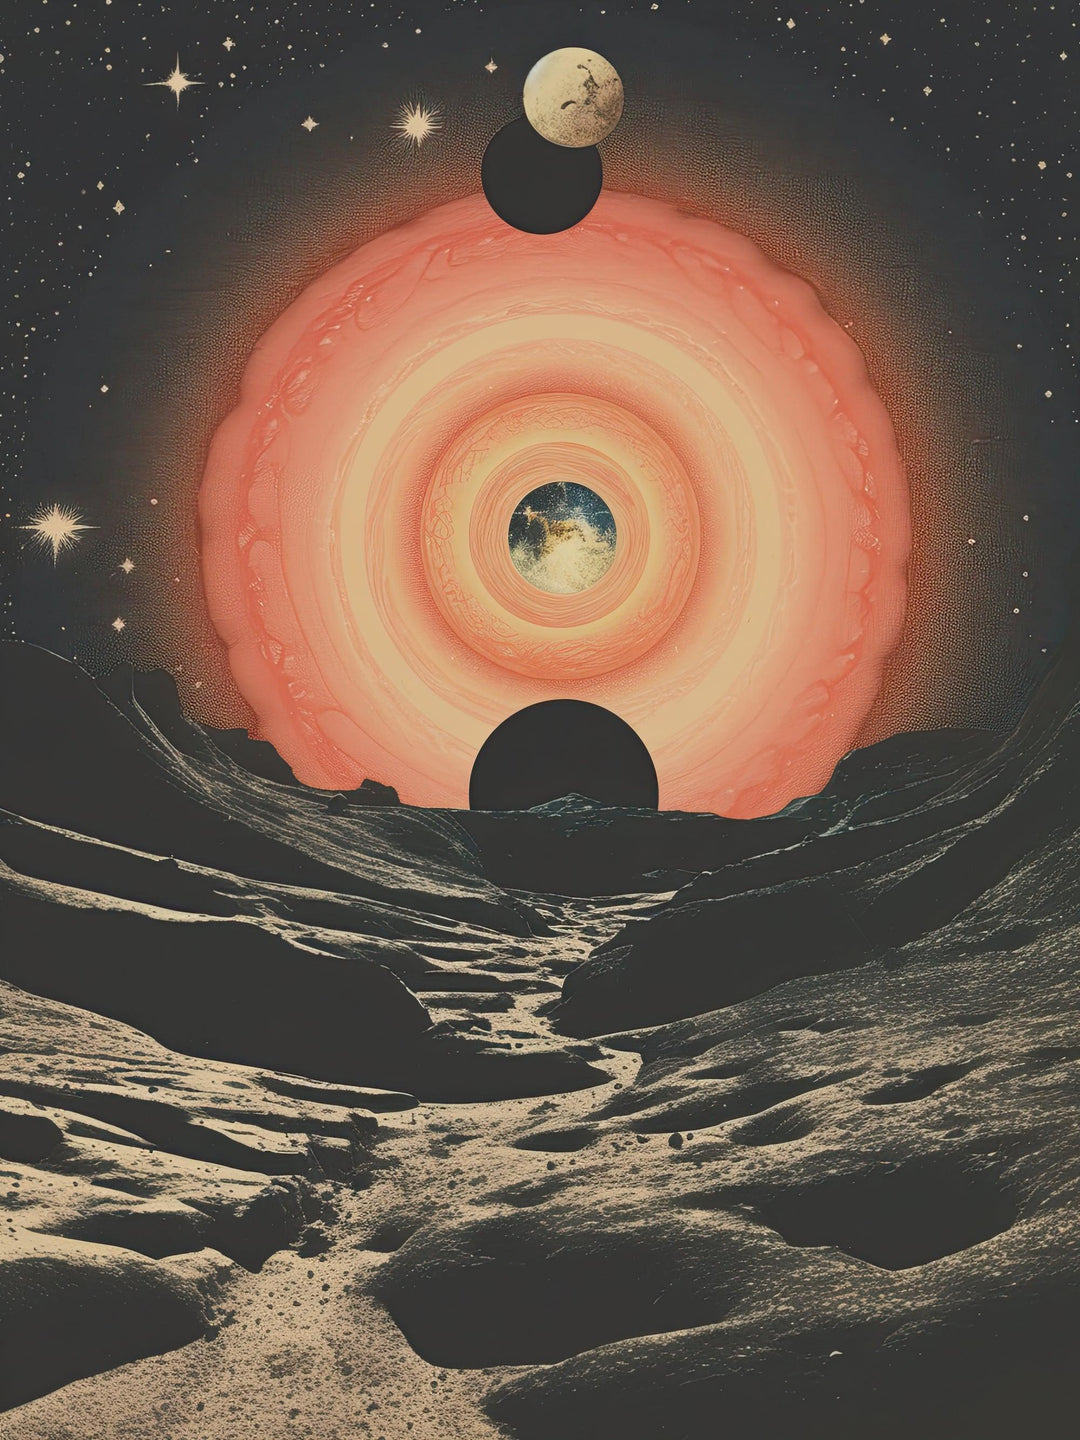 Retro Surreal Collage Kunst52 - Printree.ch astronomie, Futurismus, Mysteriös, Mystisch, Poster, retro